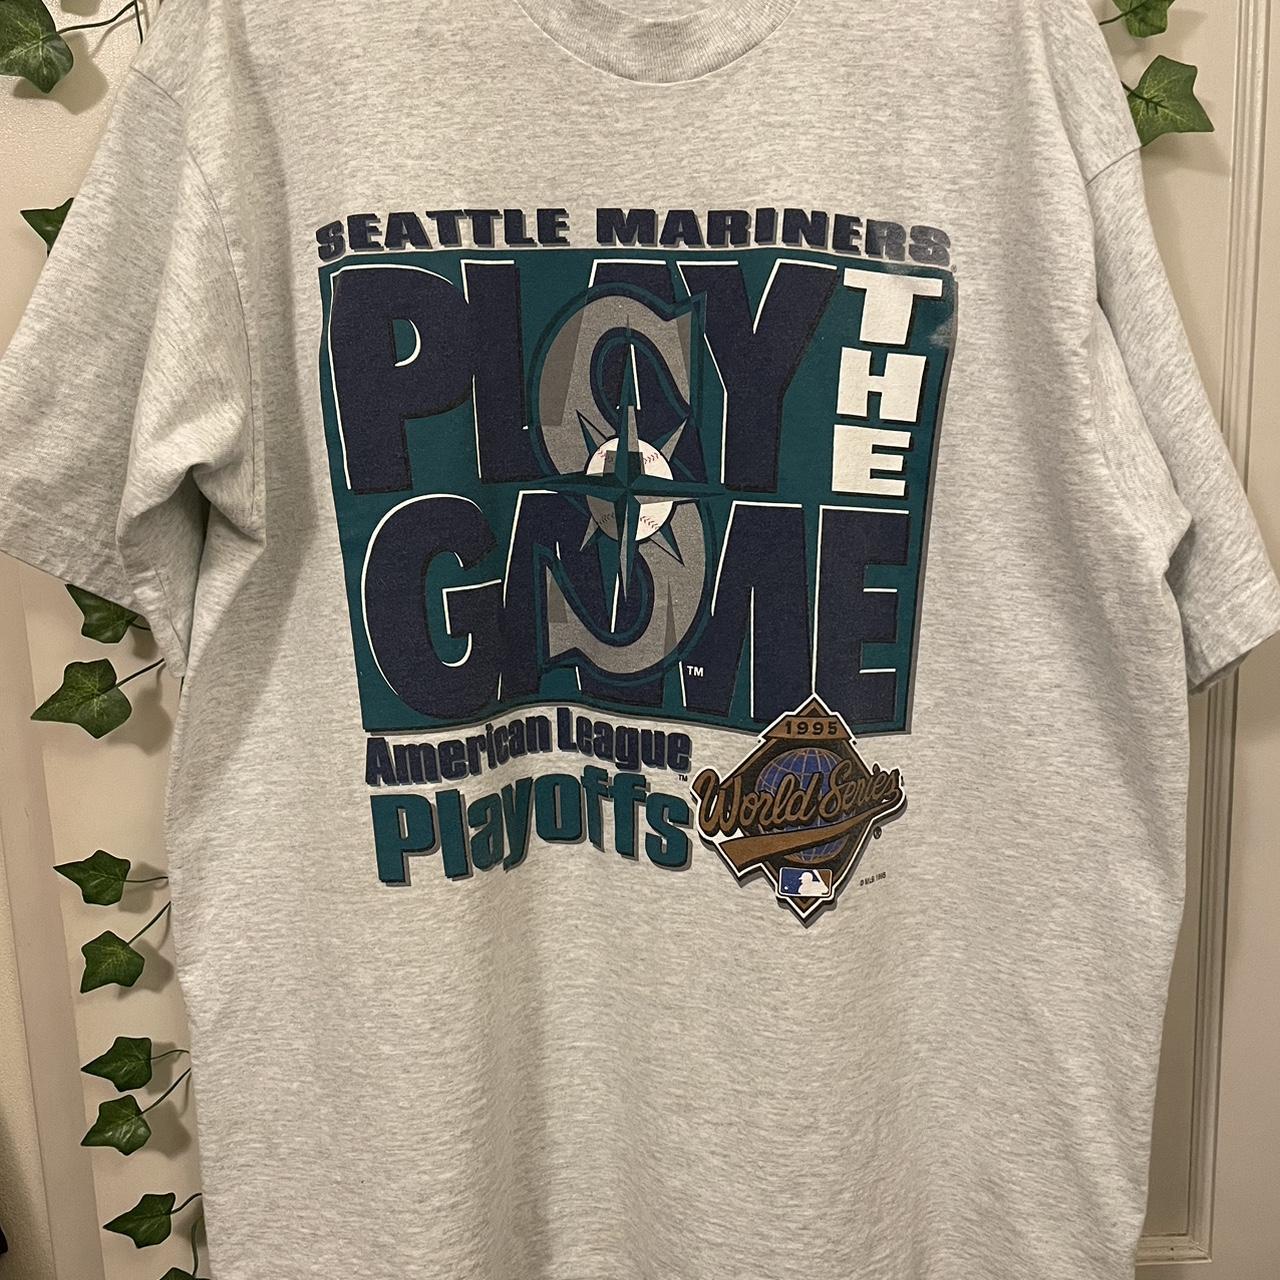 seattle mariners playoff t shirt